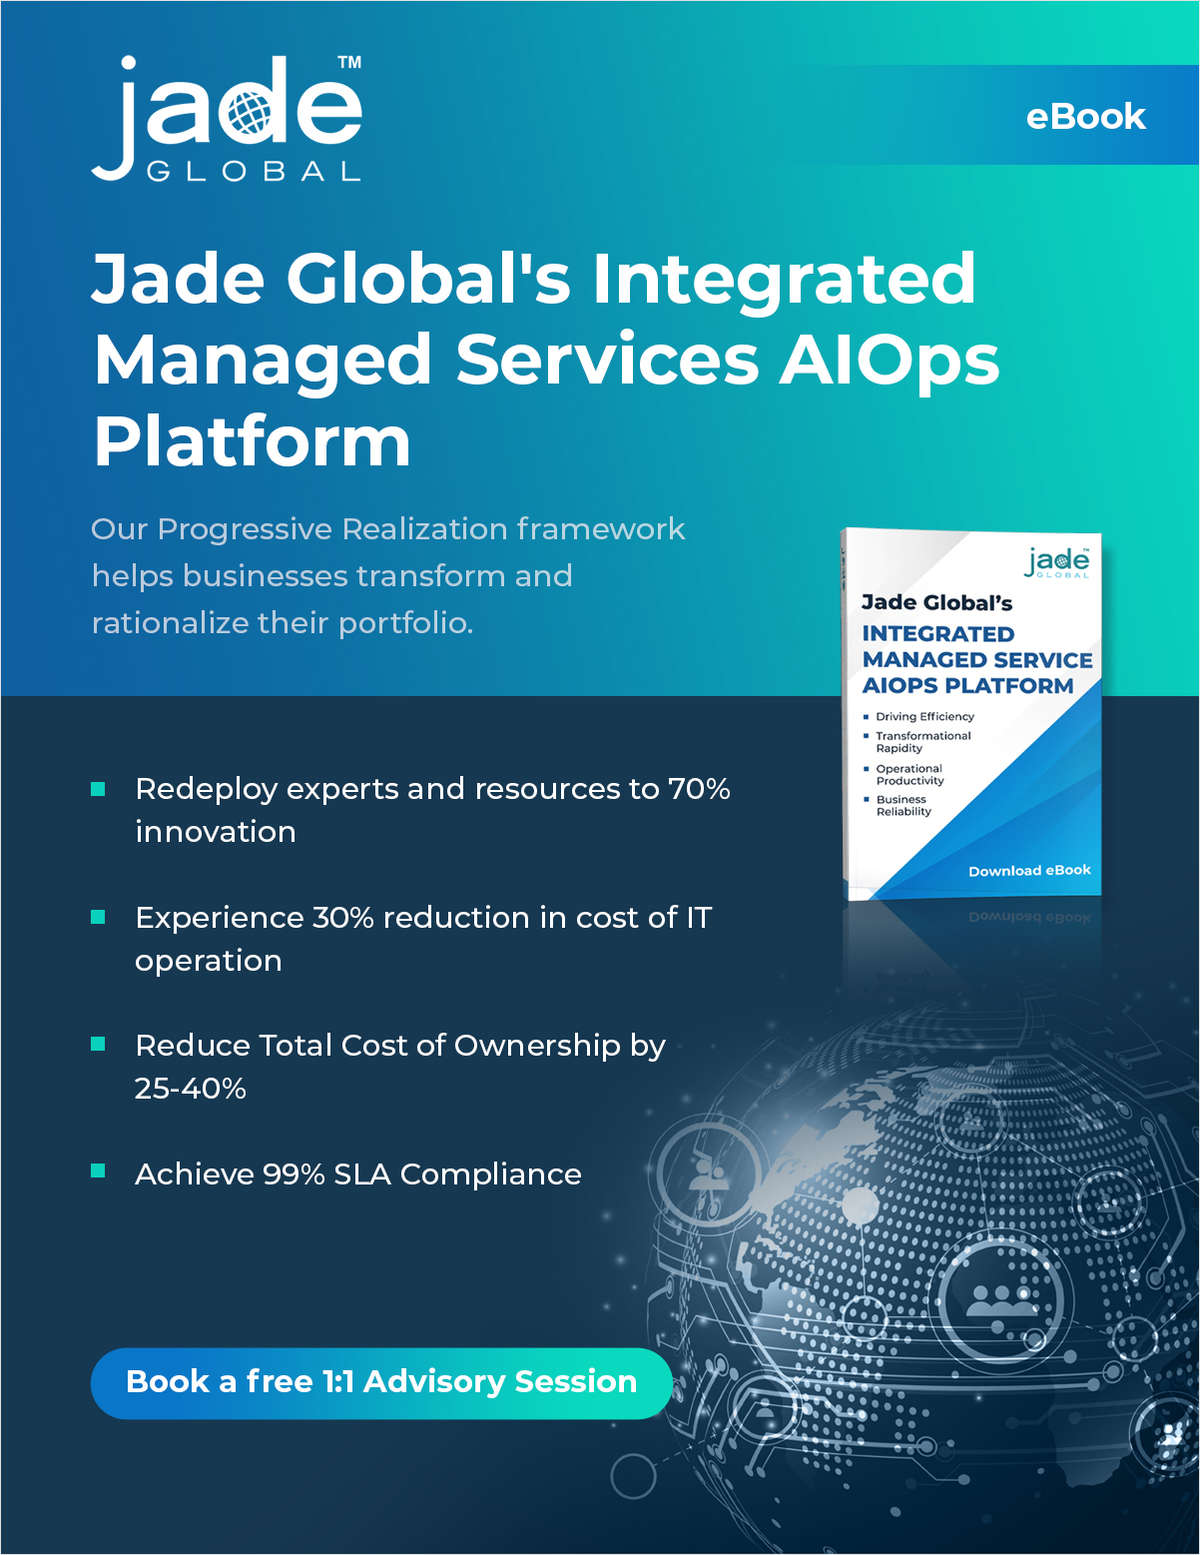 Jade Global's Integrated Managed Services AIOps Platform